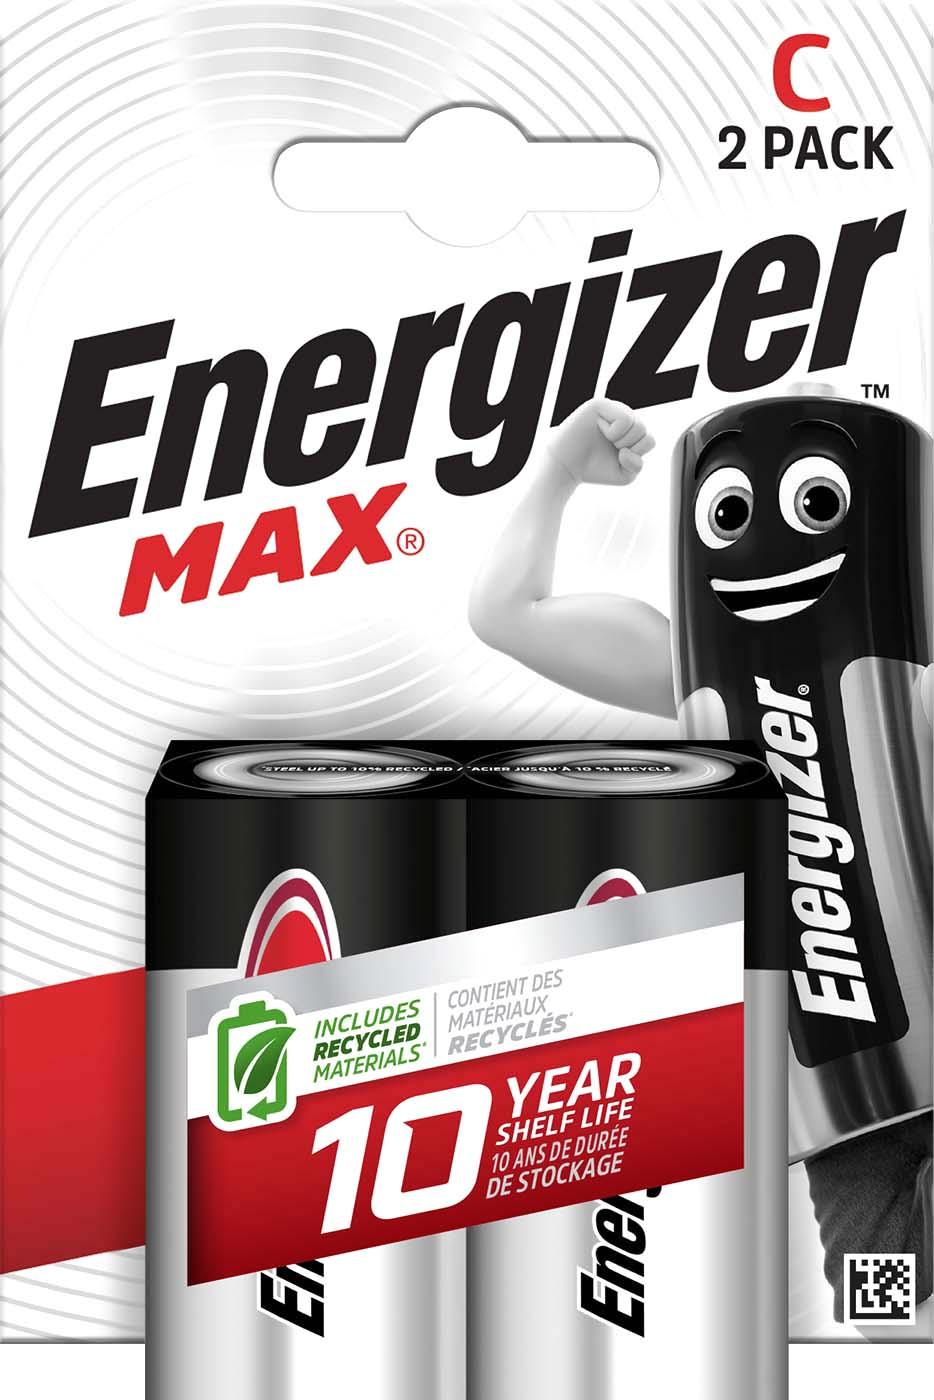 Energizer Ultra Plus C Batteries 2 Pack